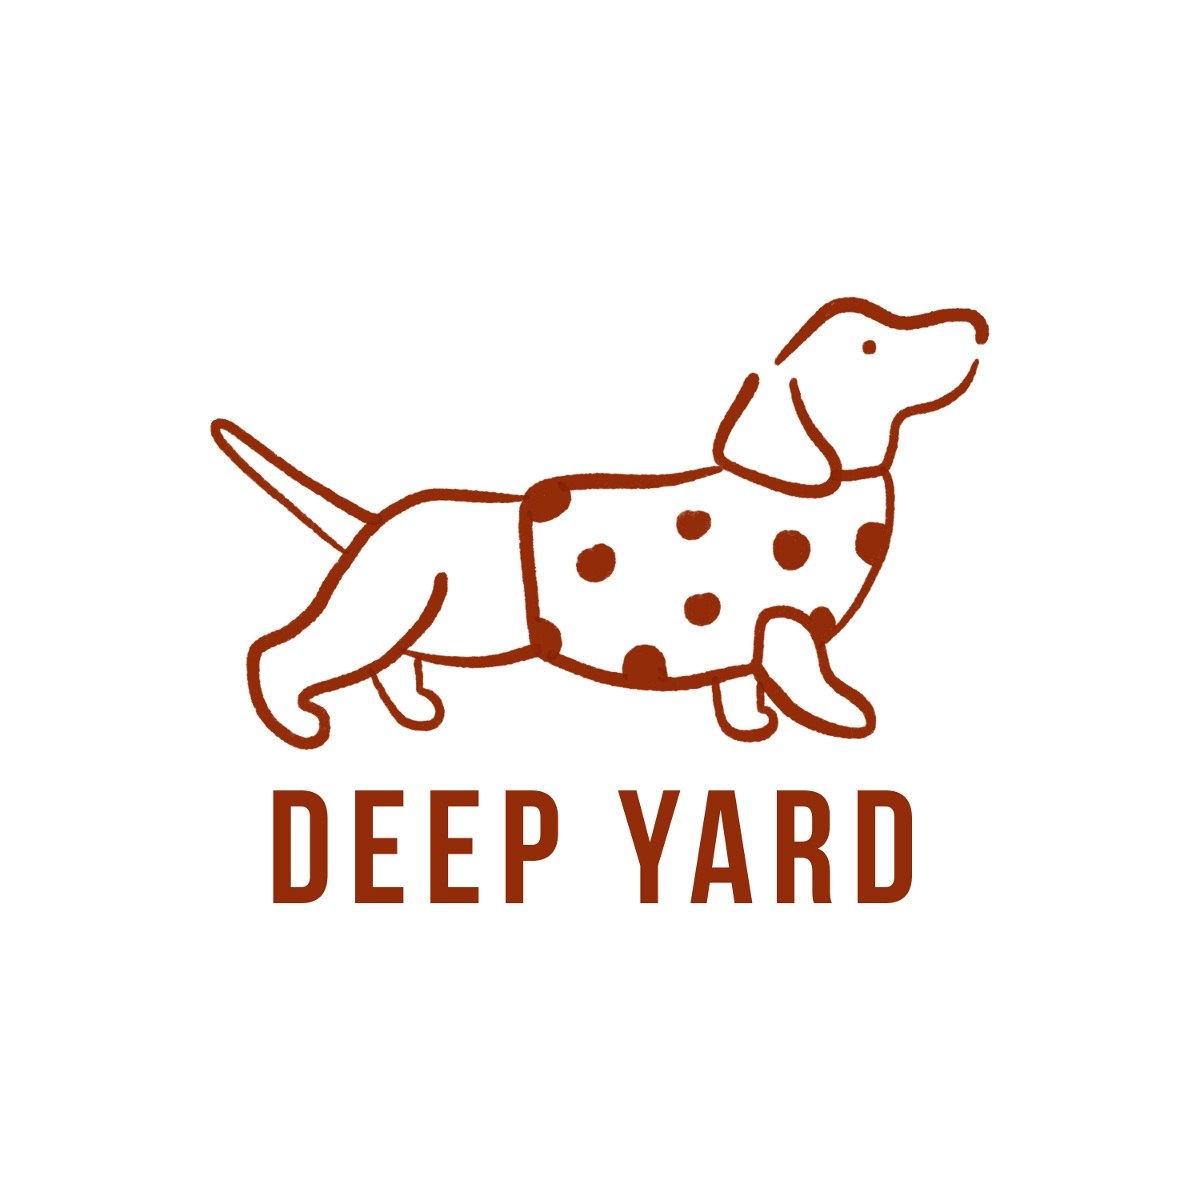 Logo DEEP YARD for sale!